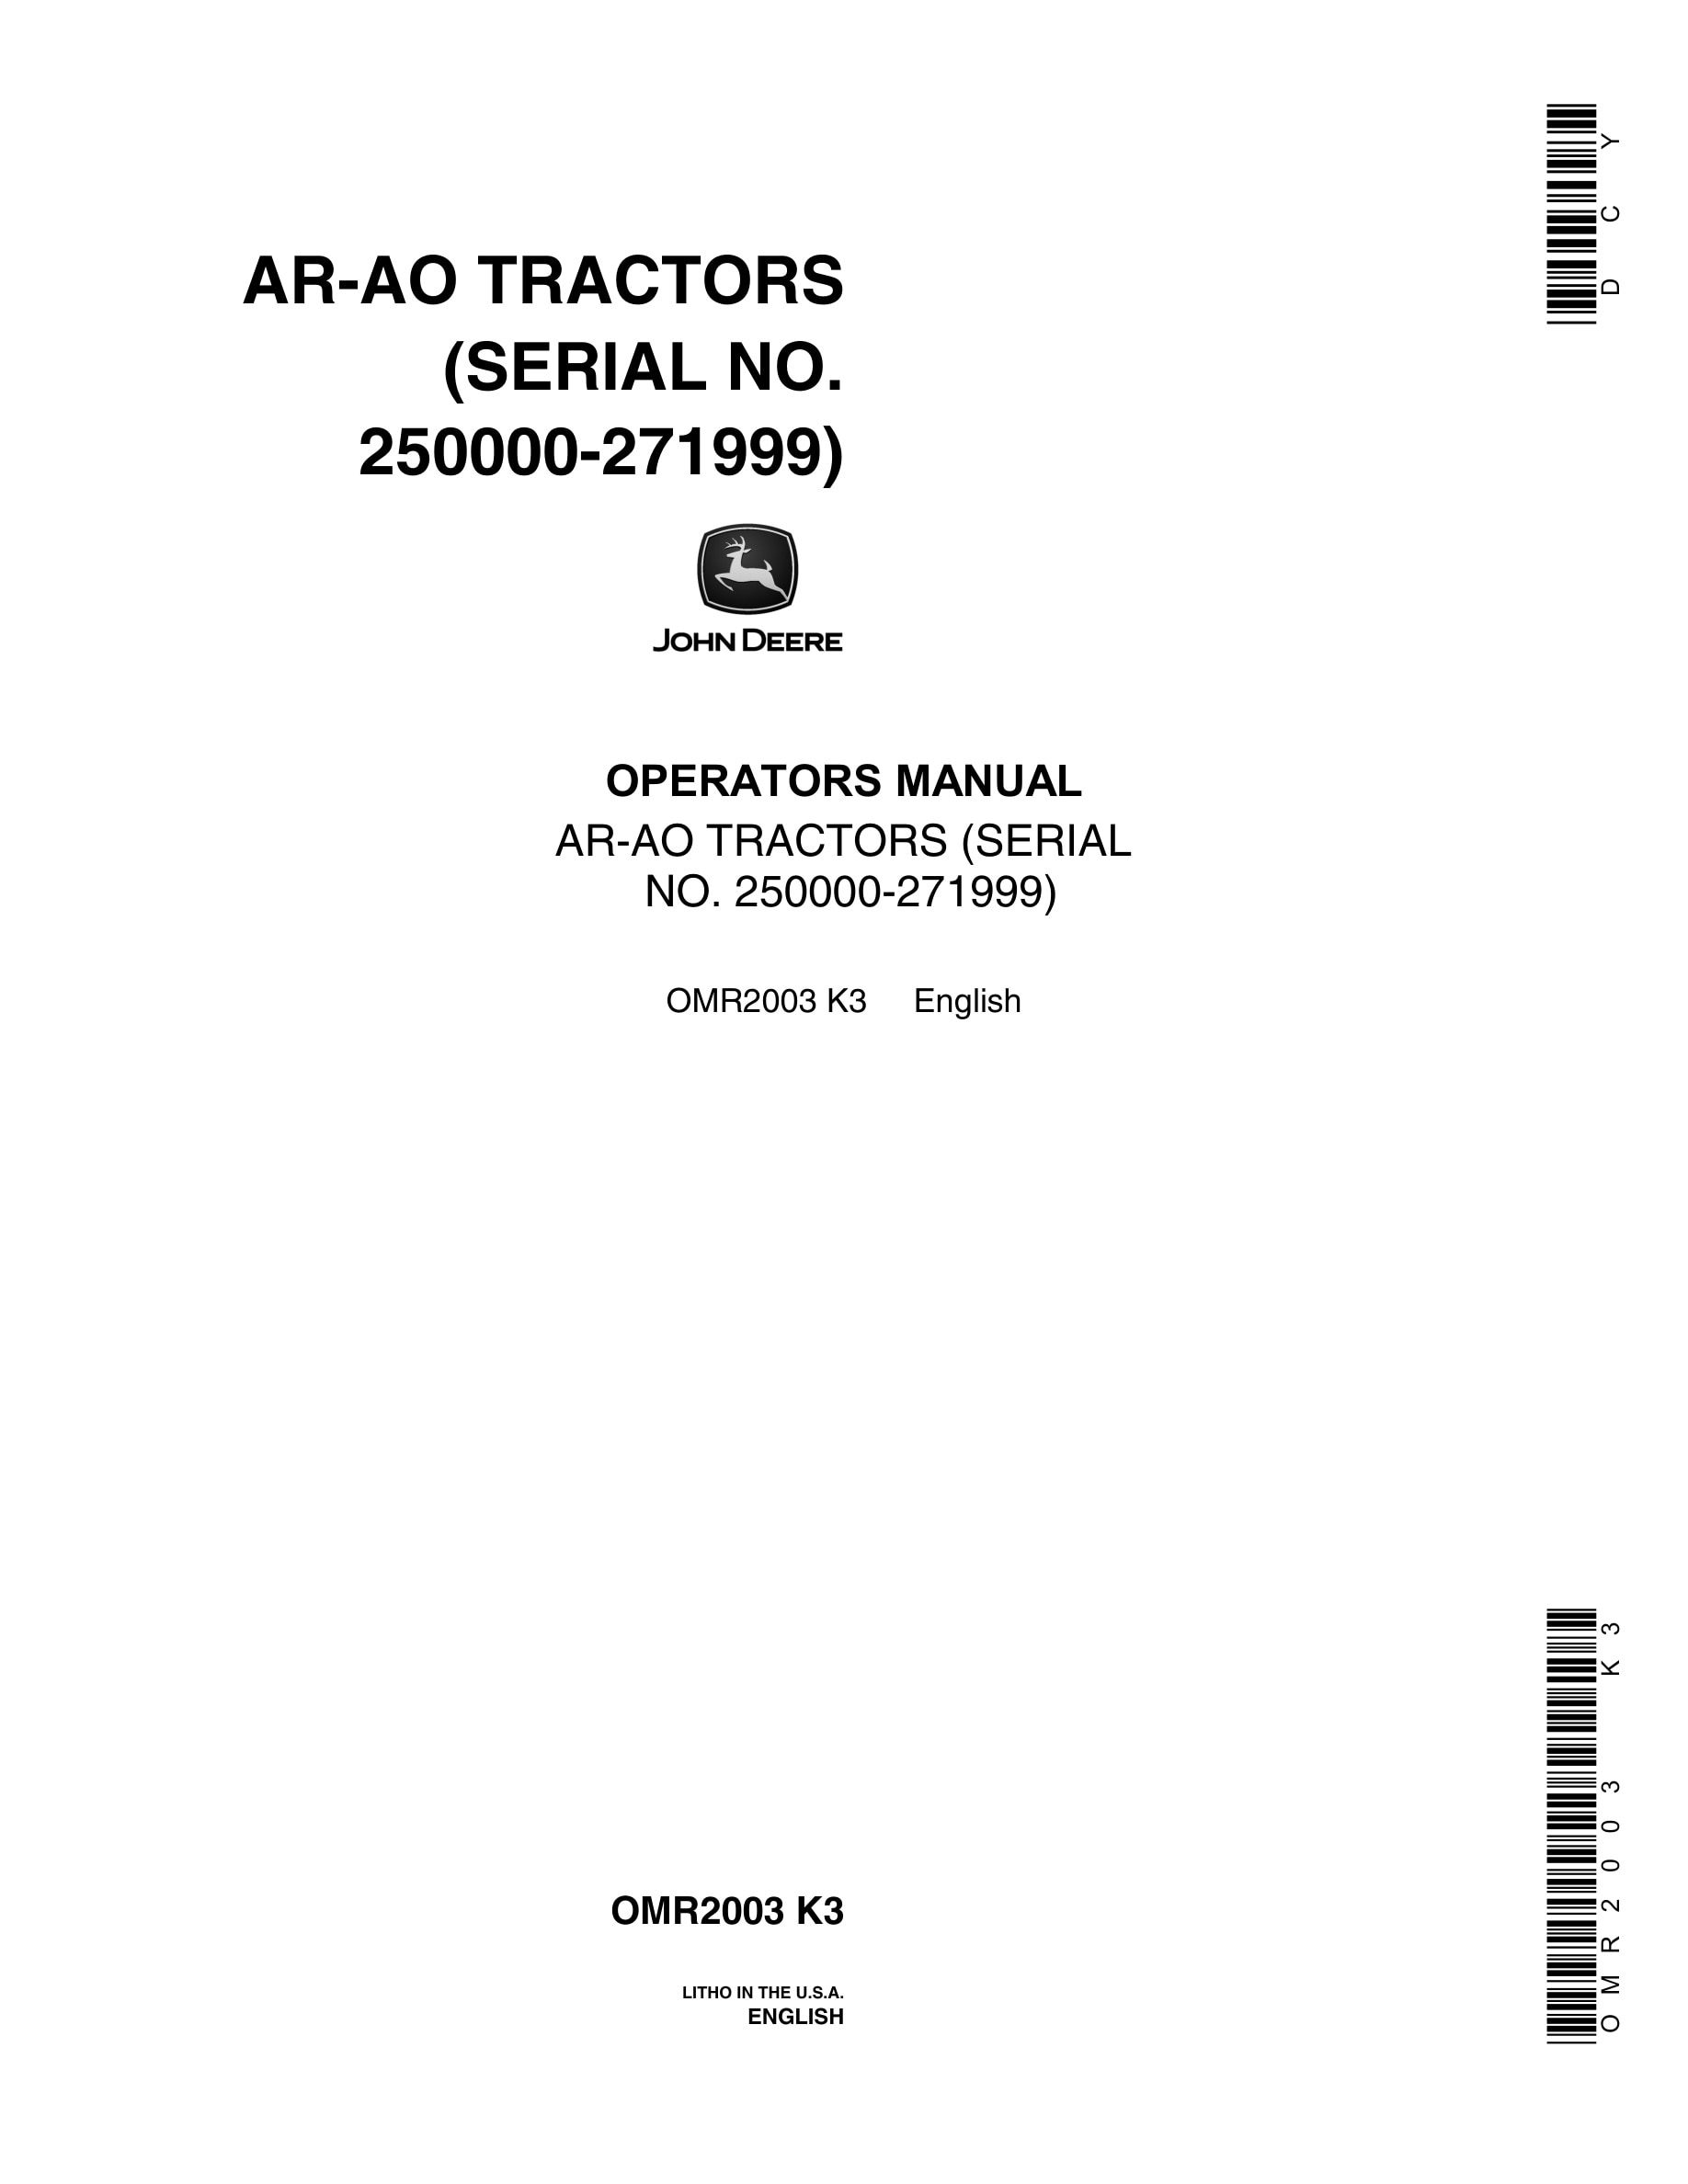 John Deere AR-AO Tractor Operator Manual OMR2003-1